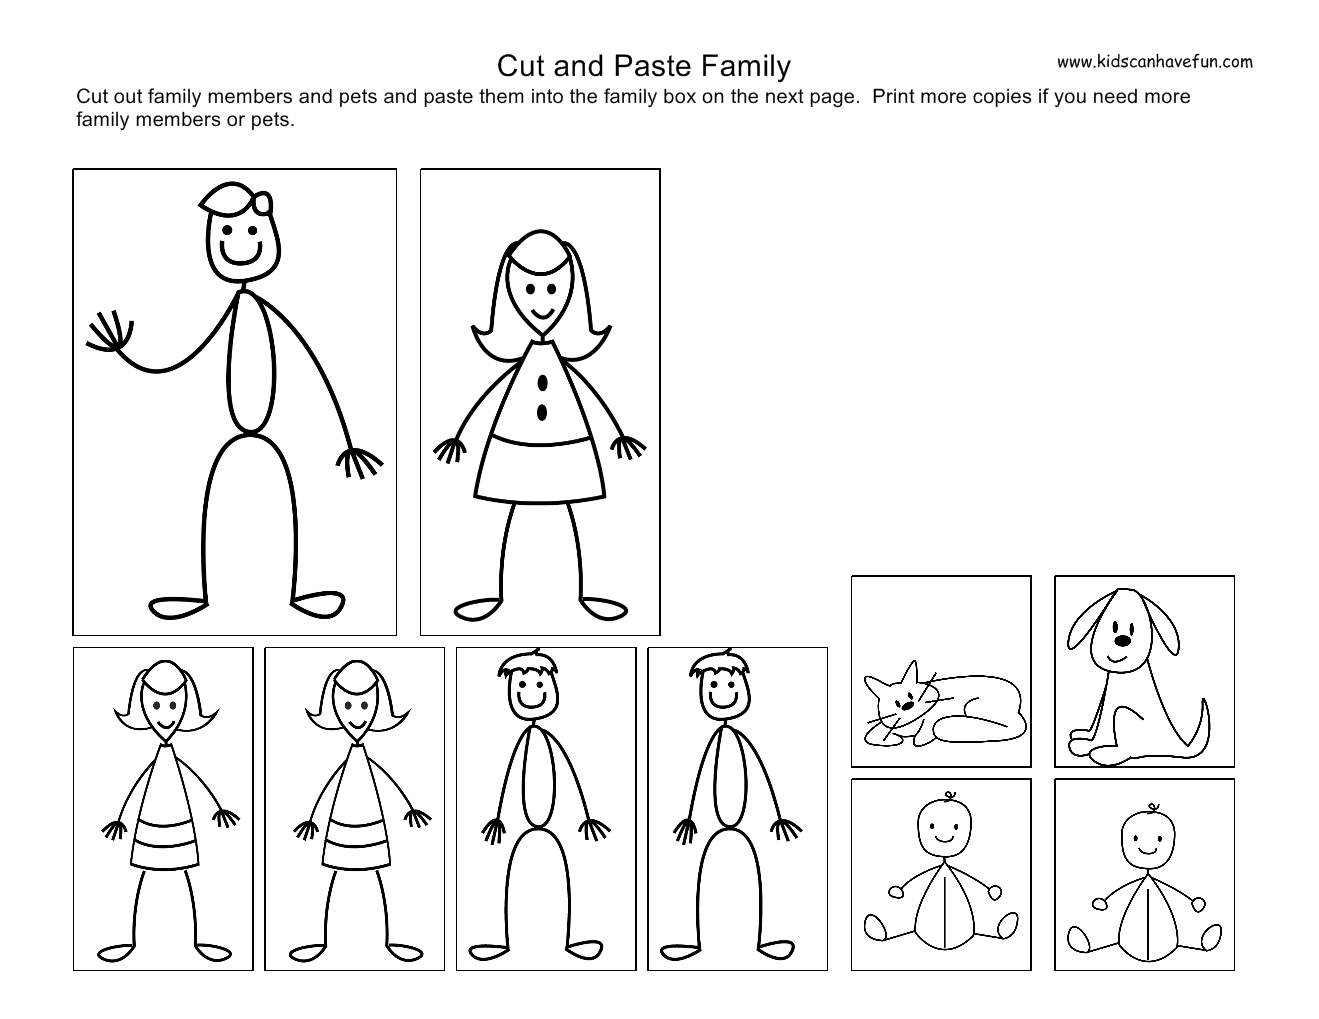 preschool-printable-images-gallery-category-page-6-printablee